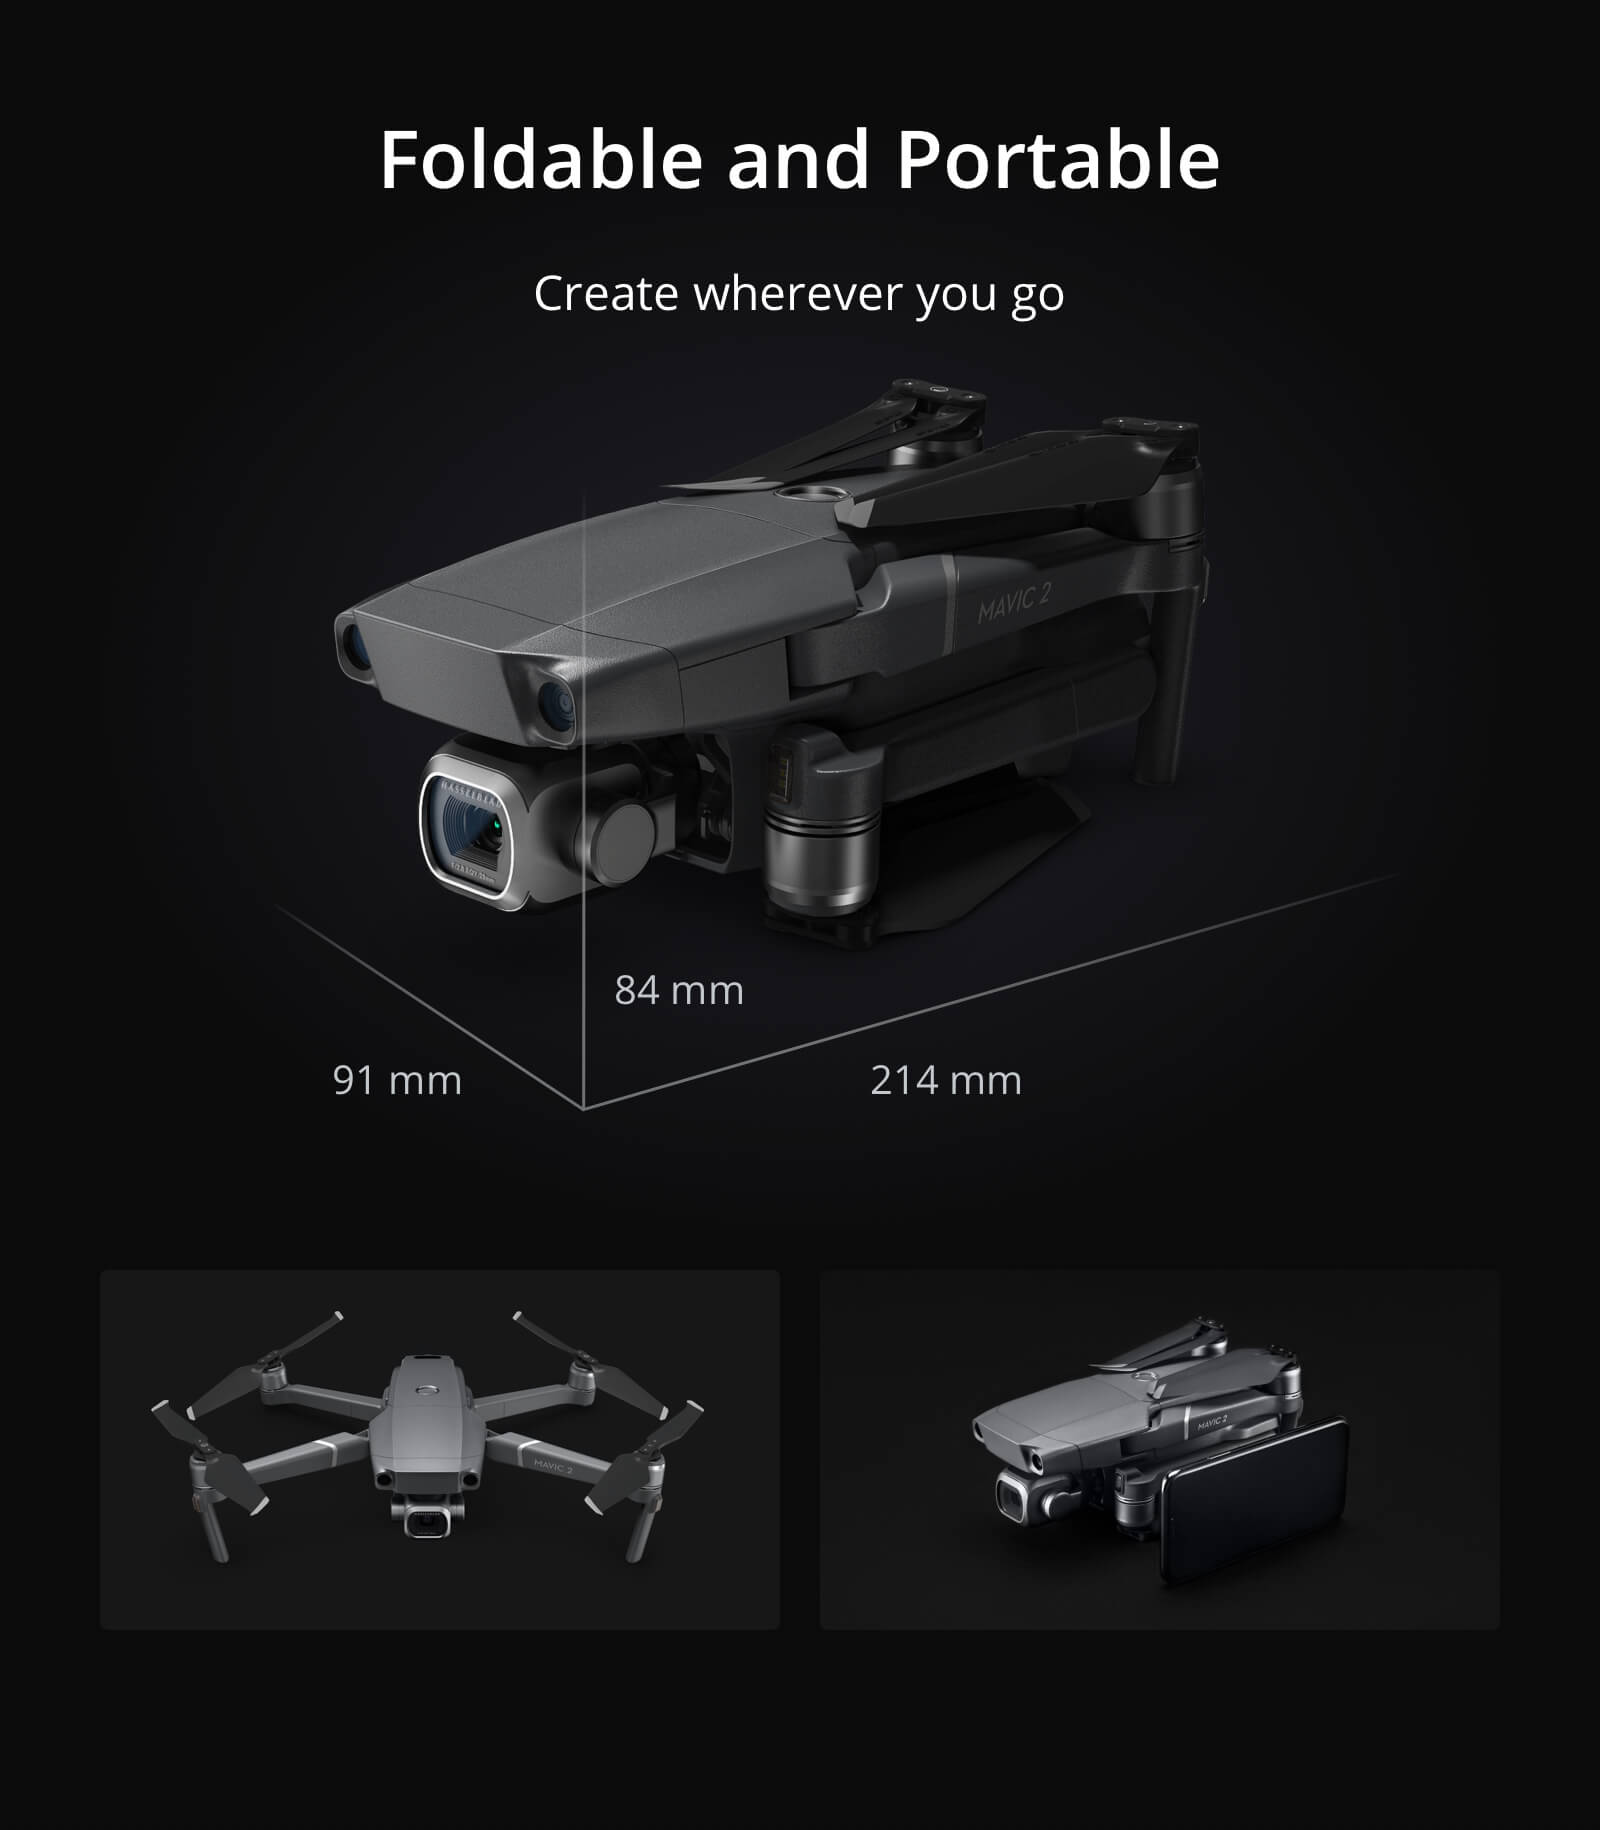 Buy DJI Mavic 2 Pro drone Australia, Melbourne, Sydney, Brisbane, Perth, Adelaide